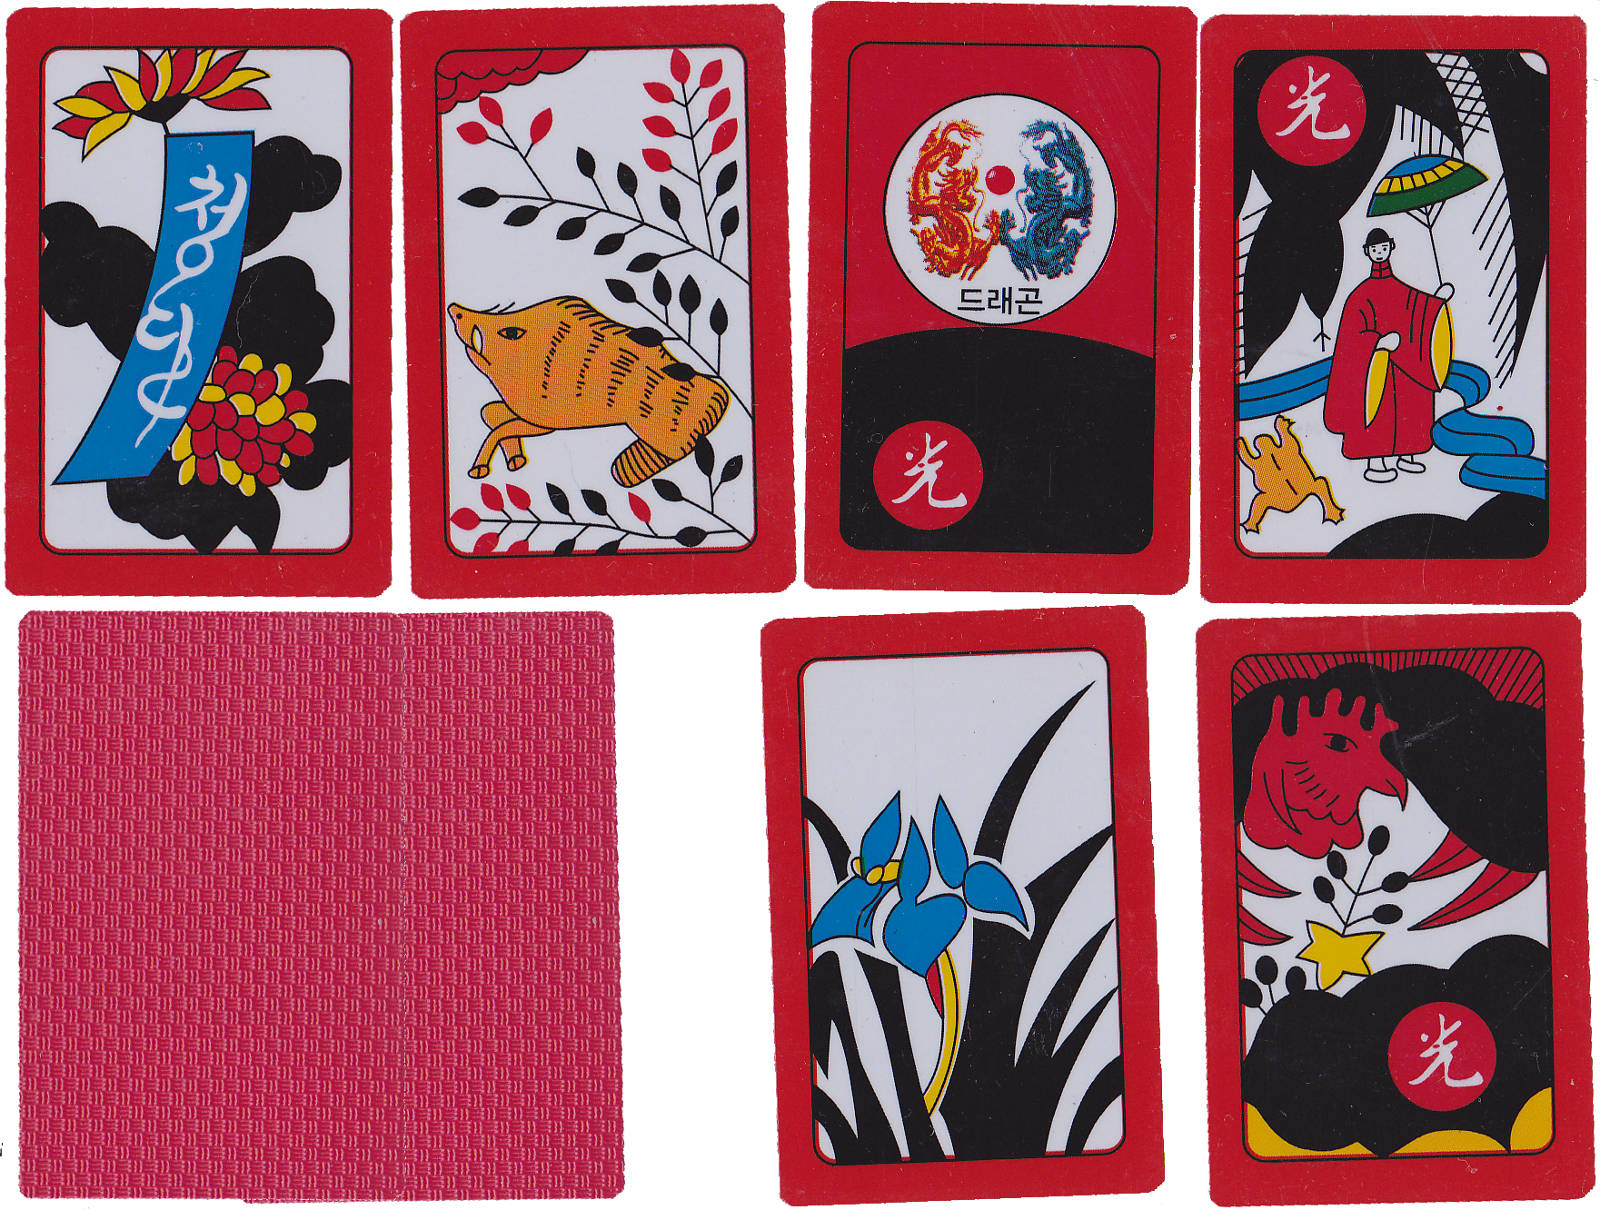 Hwatu - Korean Flower Cards